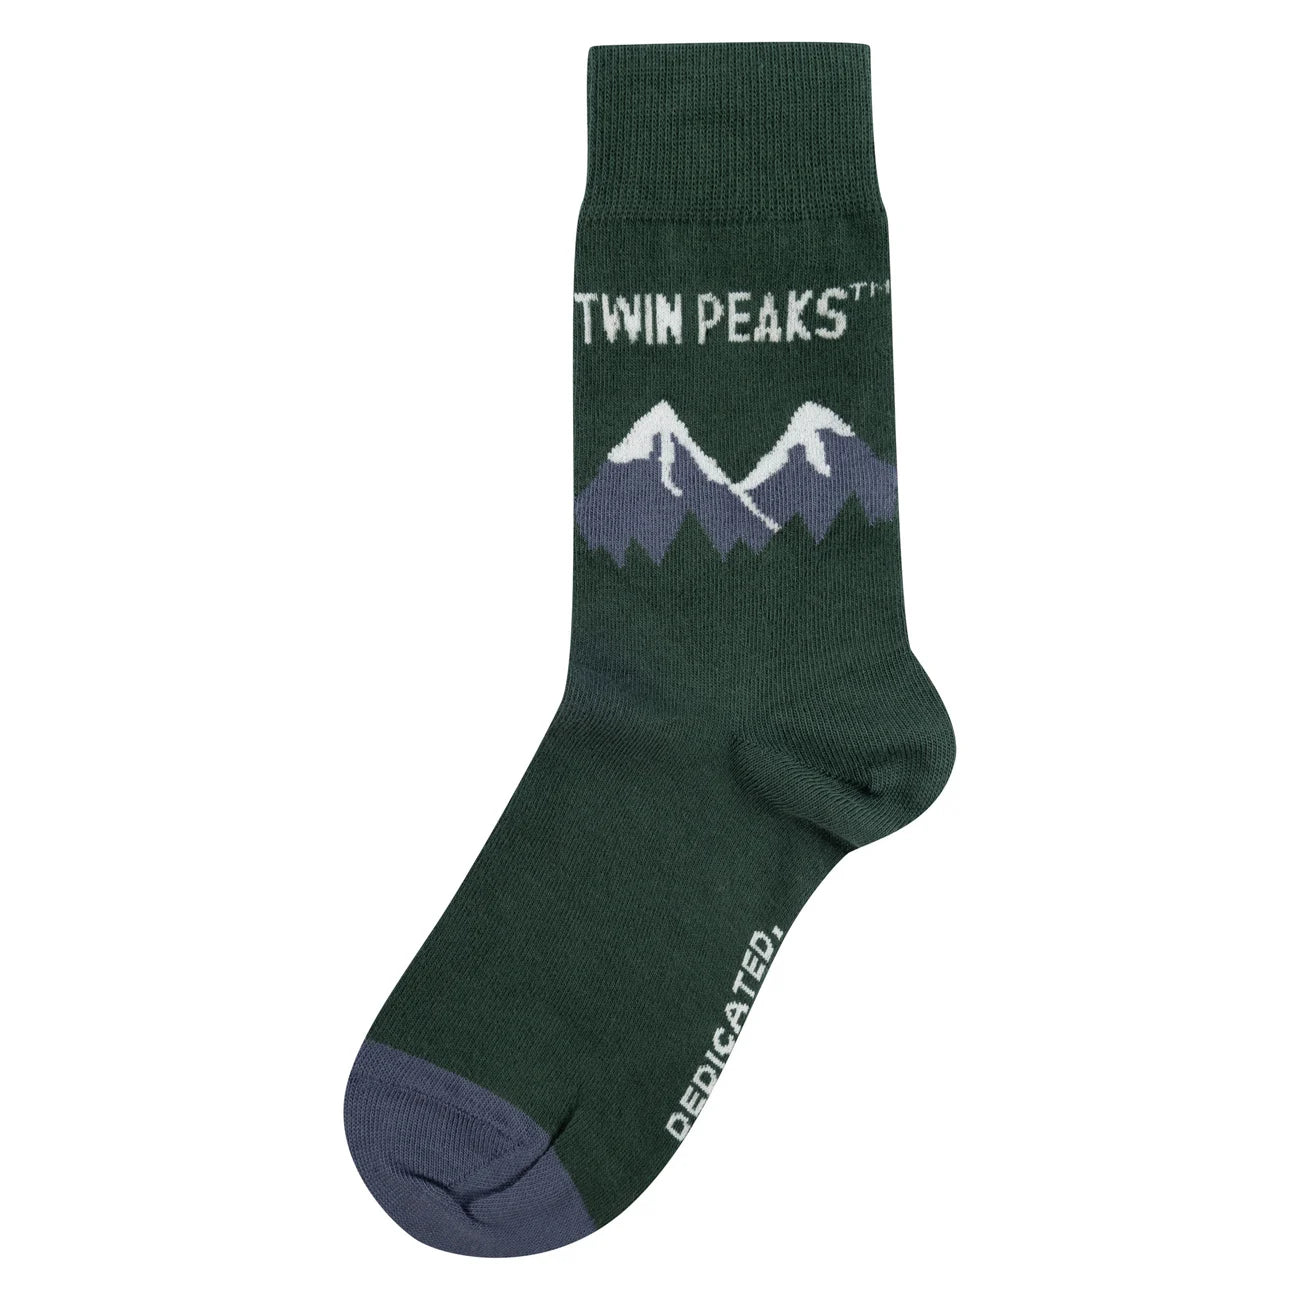 Socks Sigtuna Twin Peaks 5-Pack - Multi Color